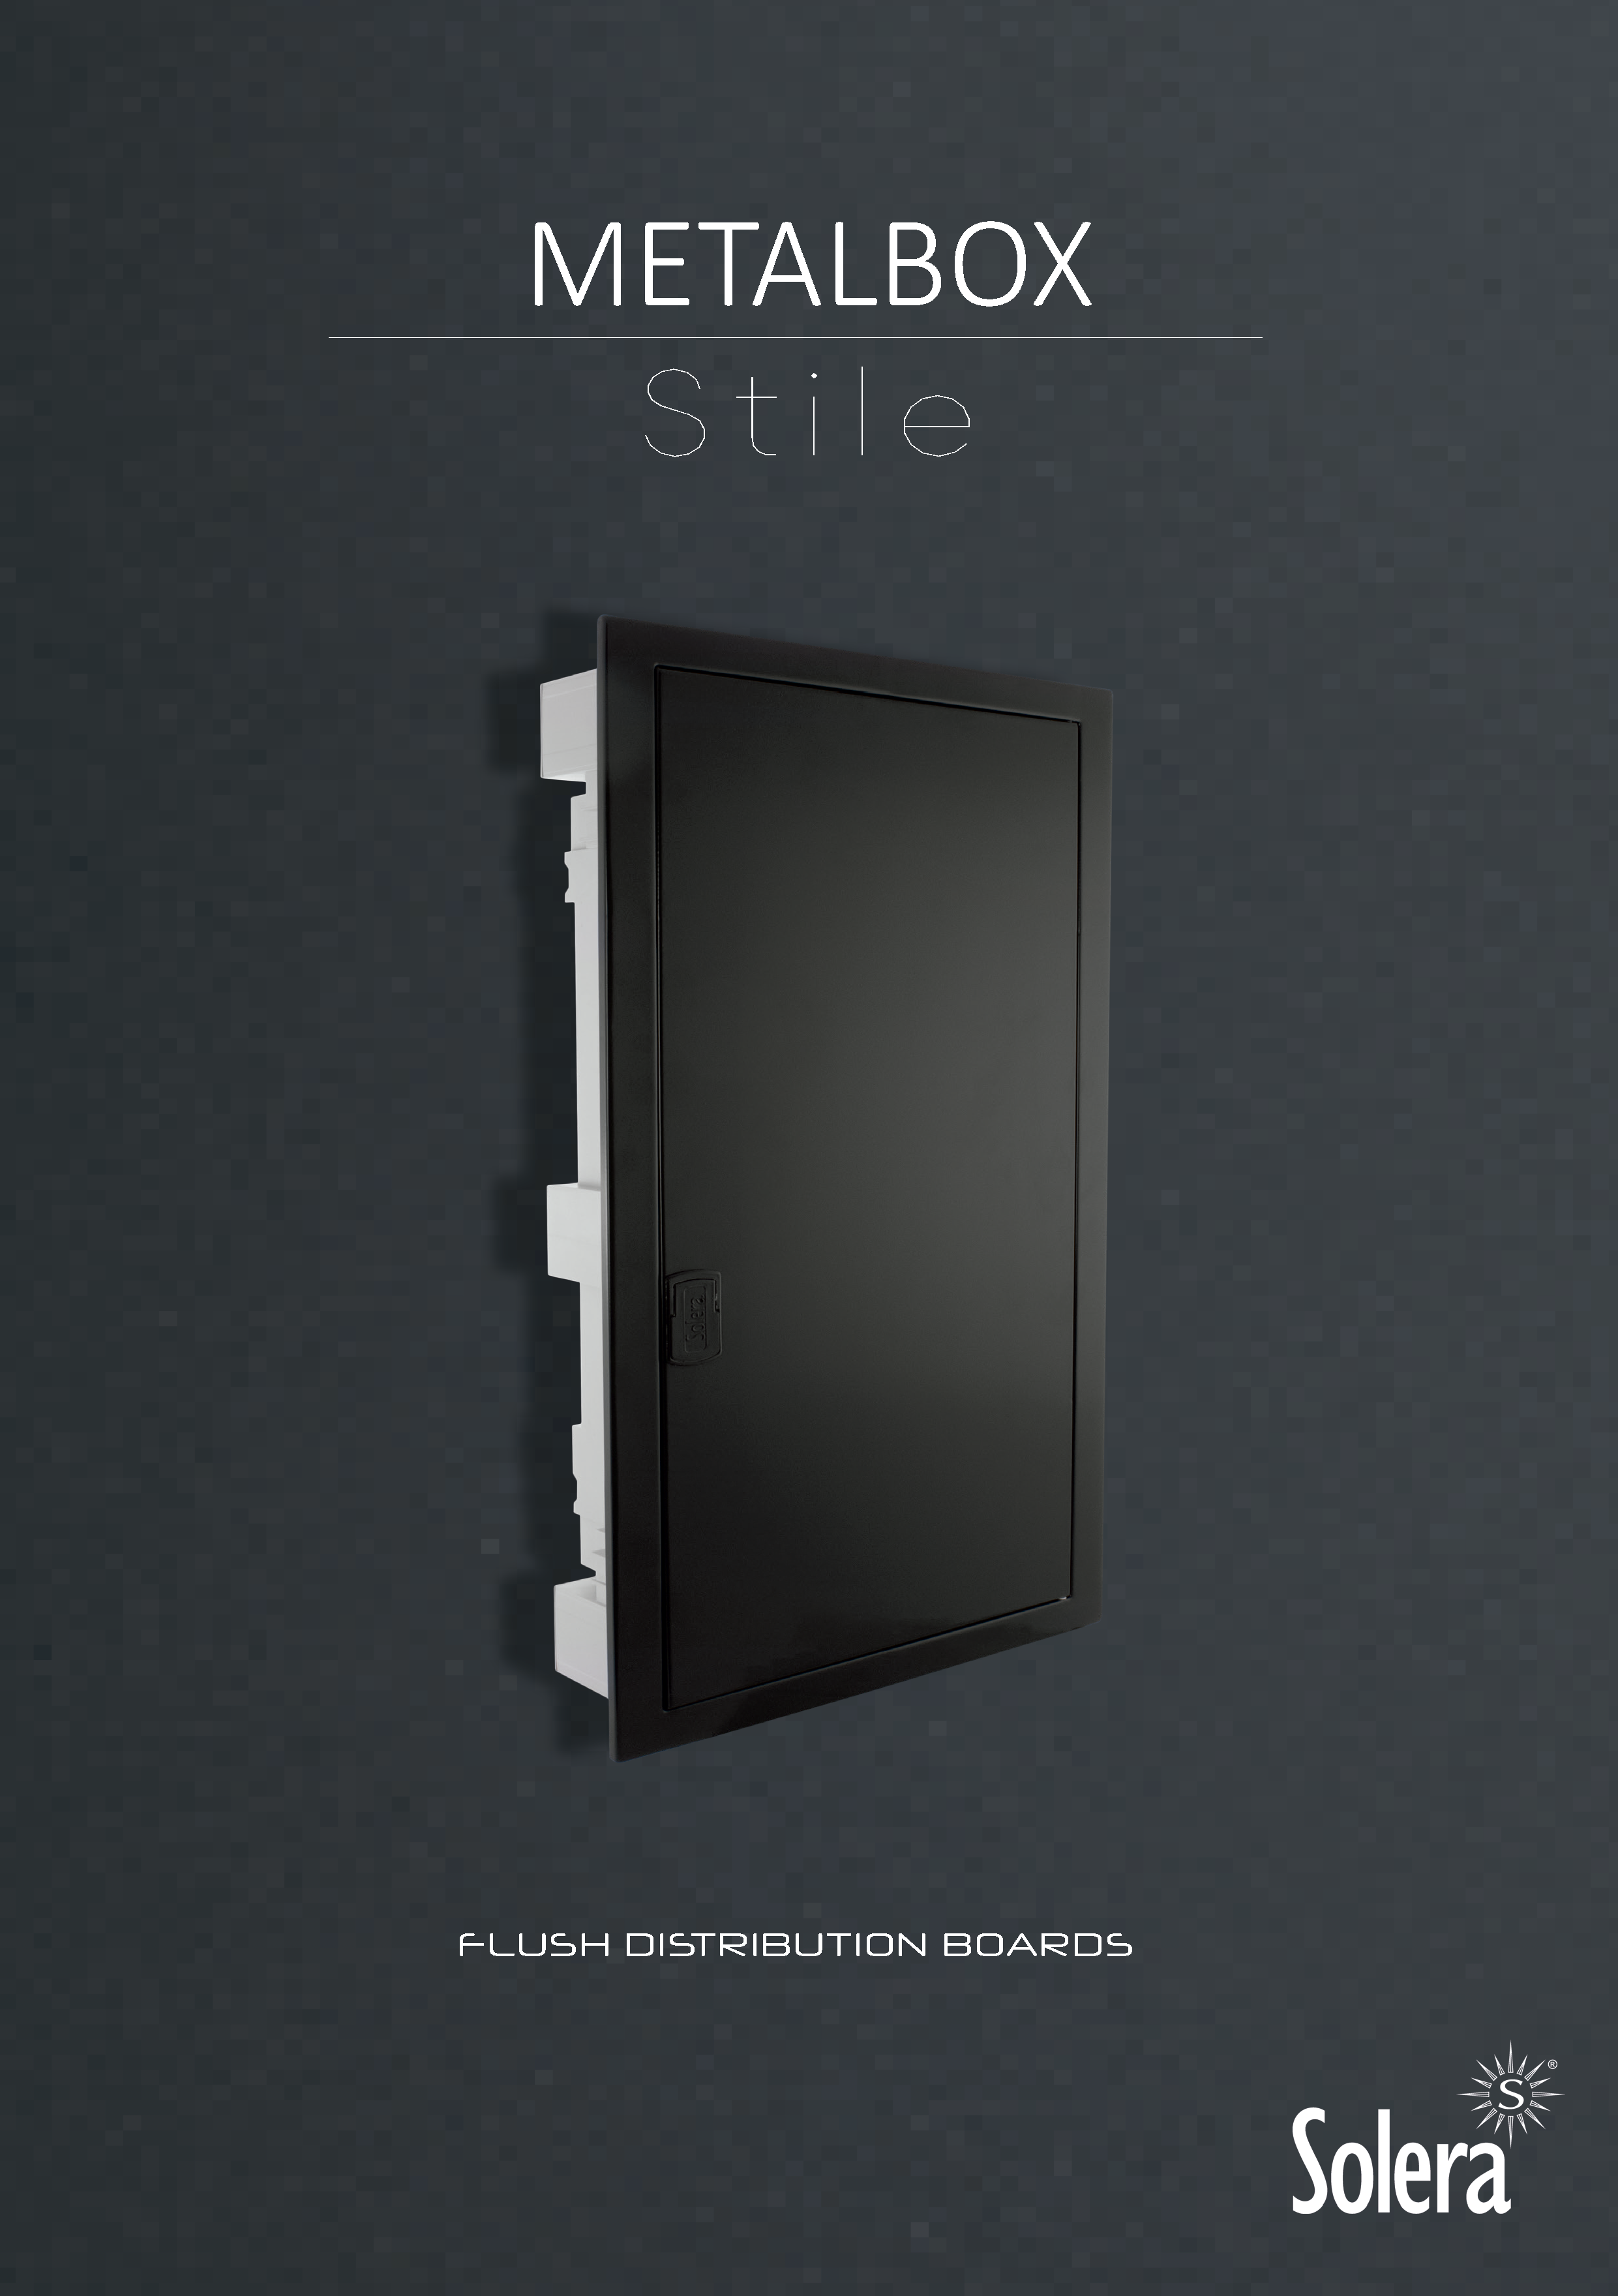 Metalbox Stile: Flush distribution boards